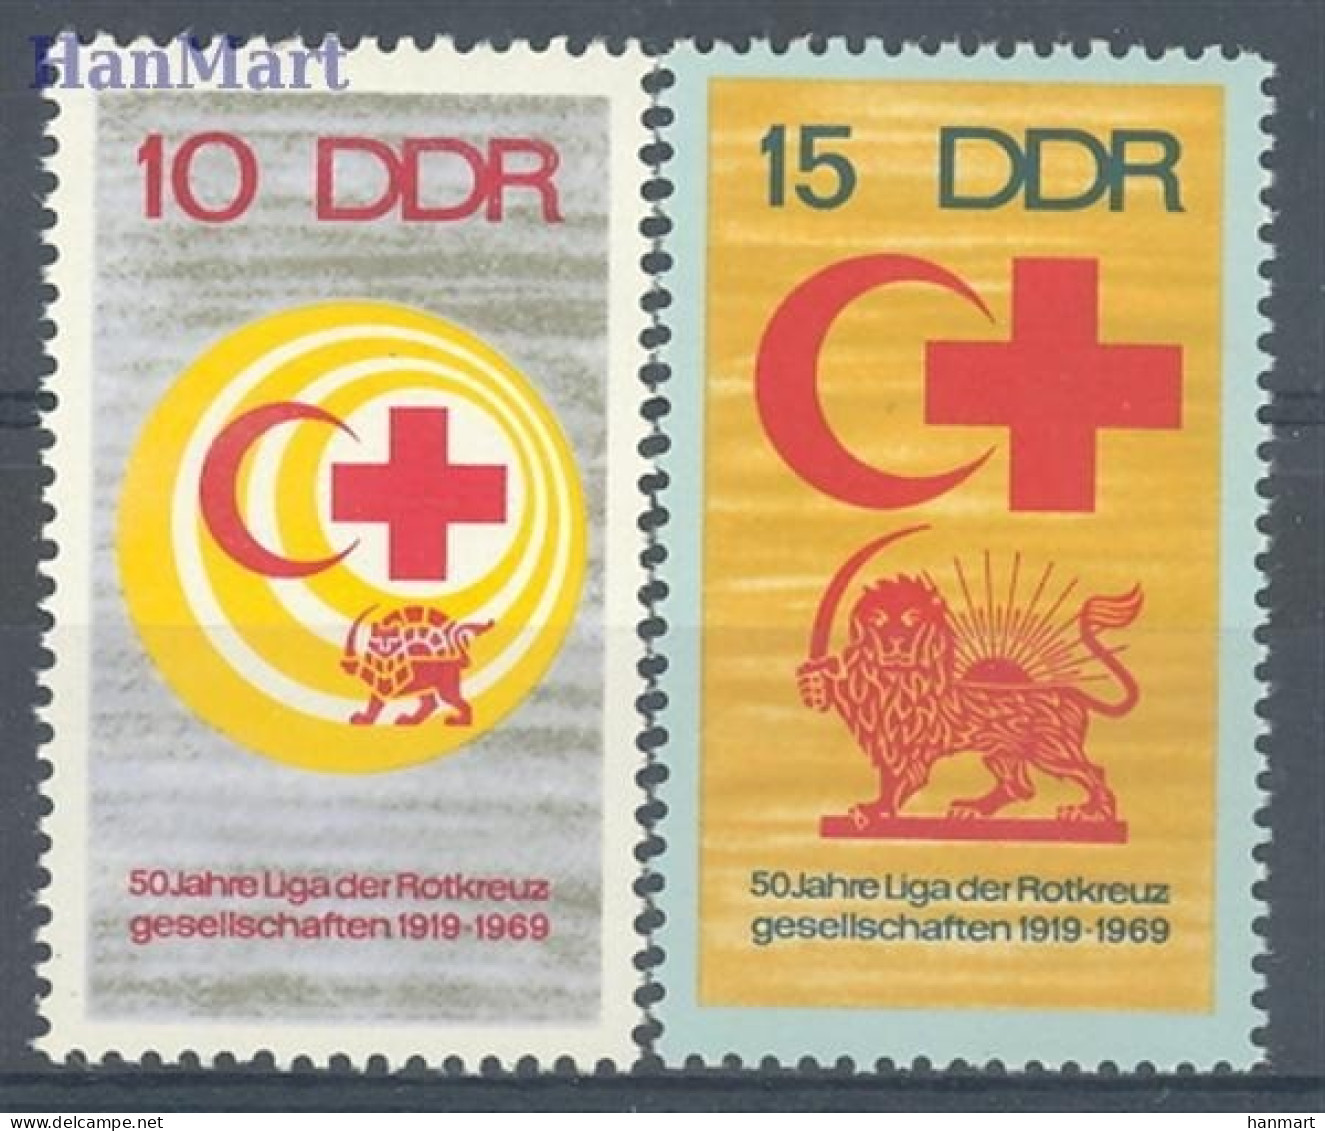 Germany, Democratic Republic (DDR) 1969 Mi 1466-1467 MNH  (ZE5 DDR1466-1467) - Briefmarken